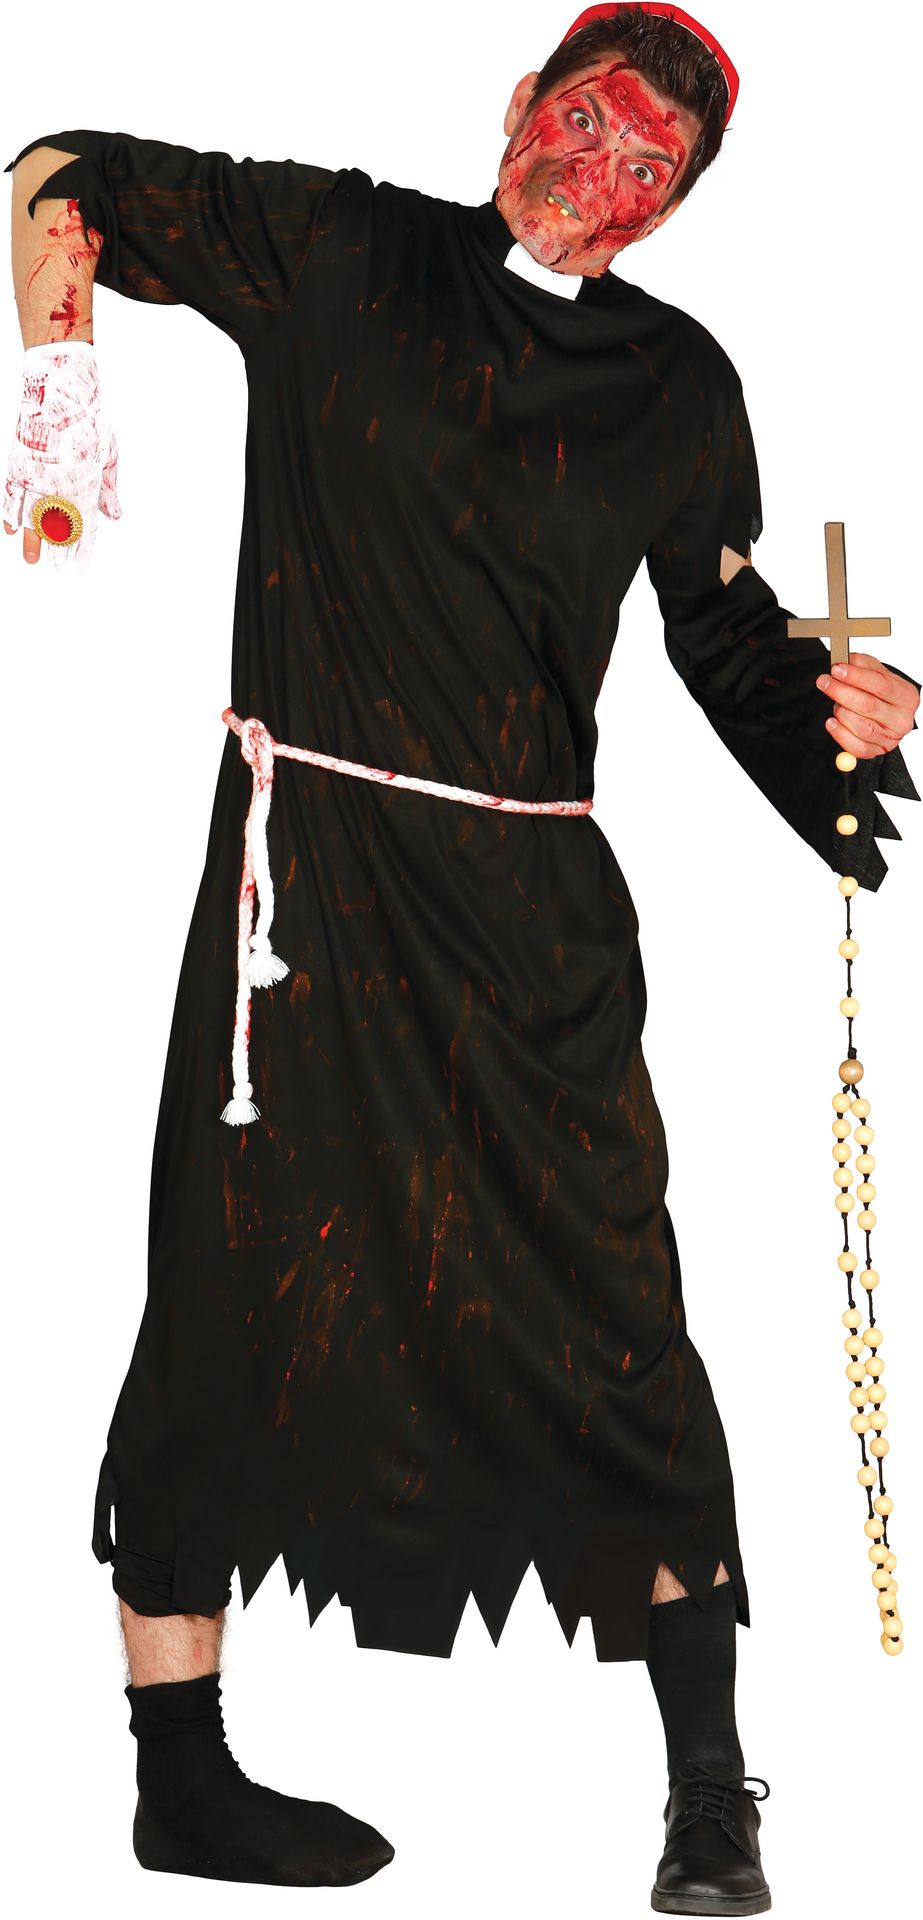 Zombie priester kostuum